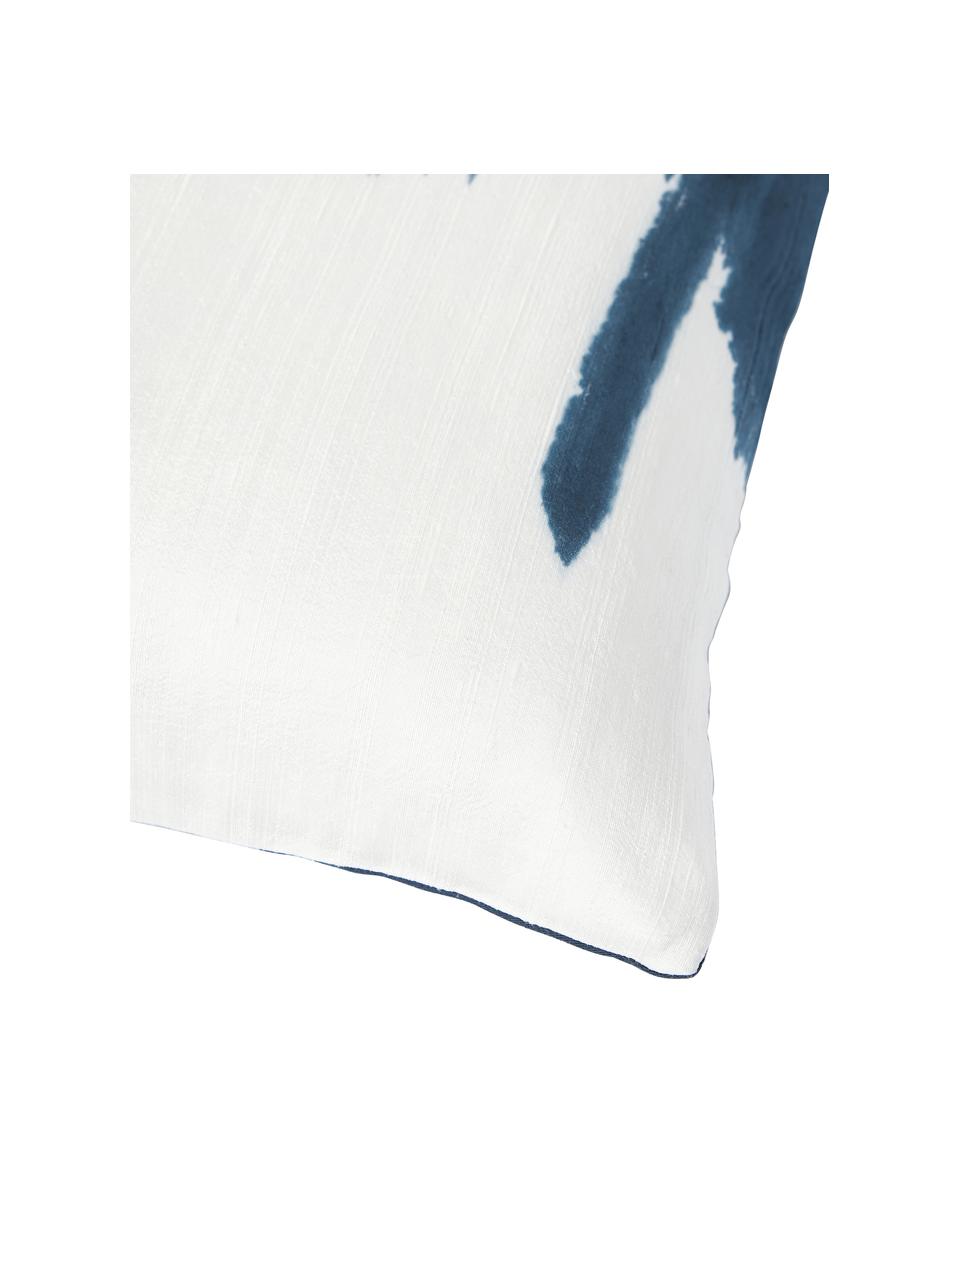 Kussenhoes Aryane uit zijde, Blauw, wit, B 45 x L 45 cm